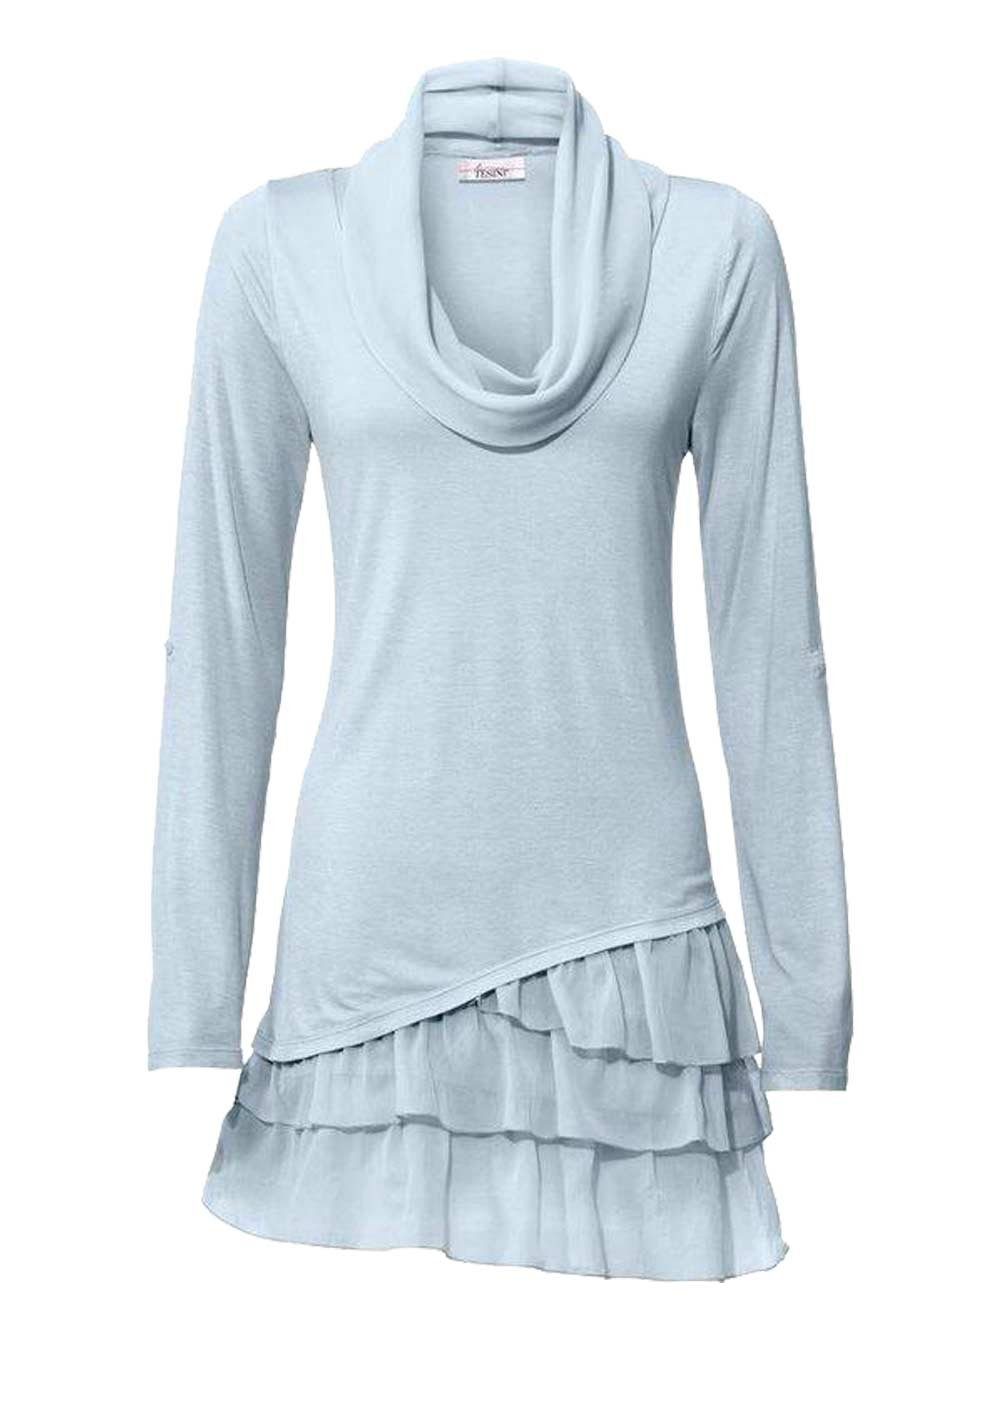 Wasserfallshirt hellblau Designer-Shirt LINEA Damen 2-in-1, heine TESINI